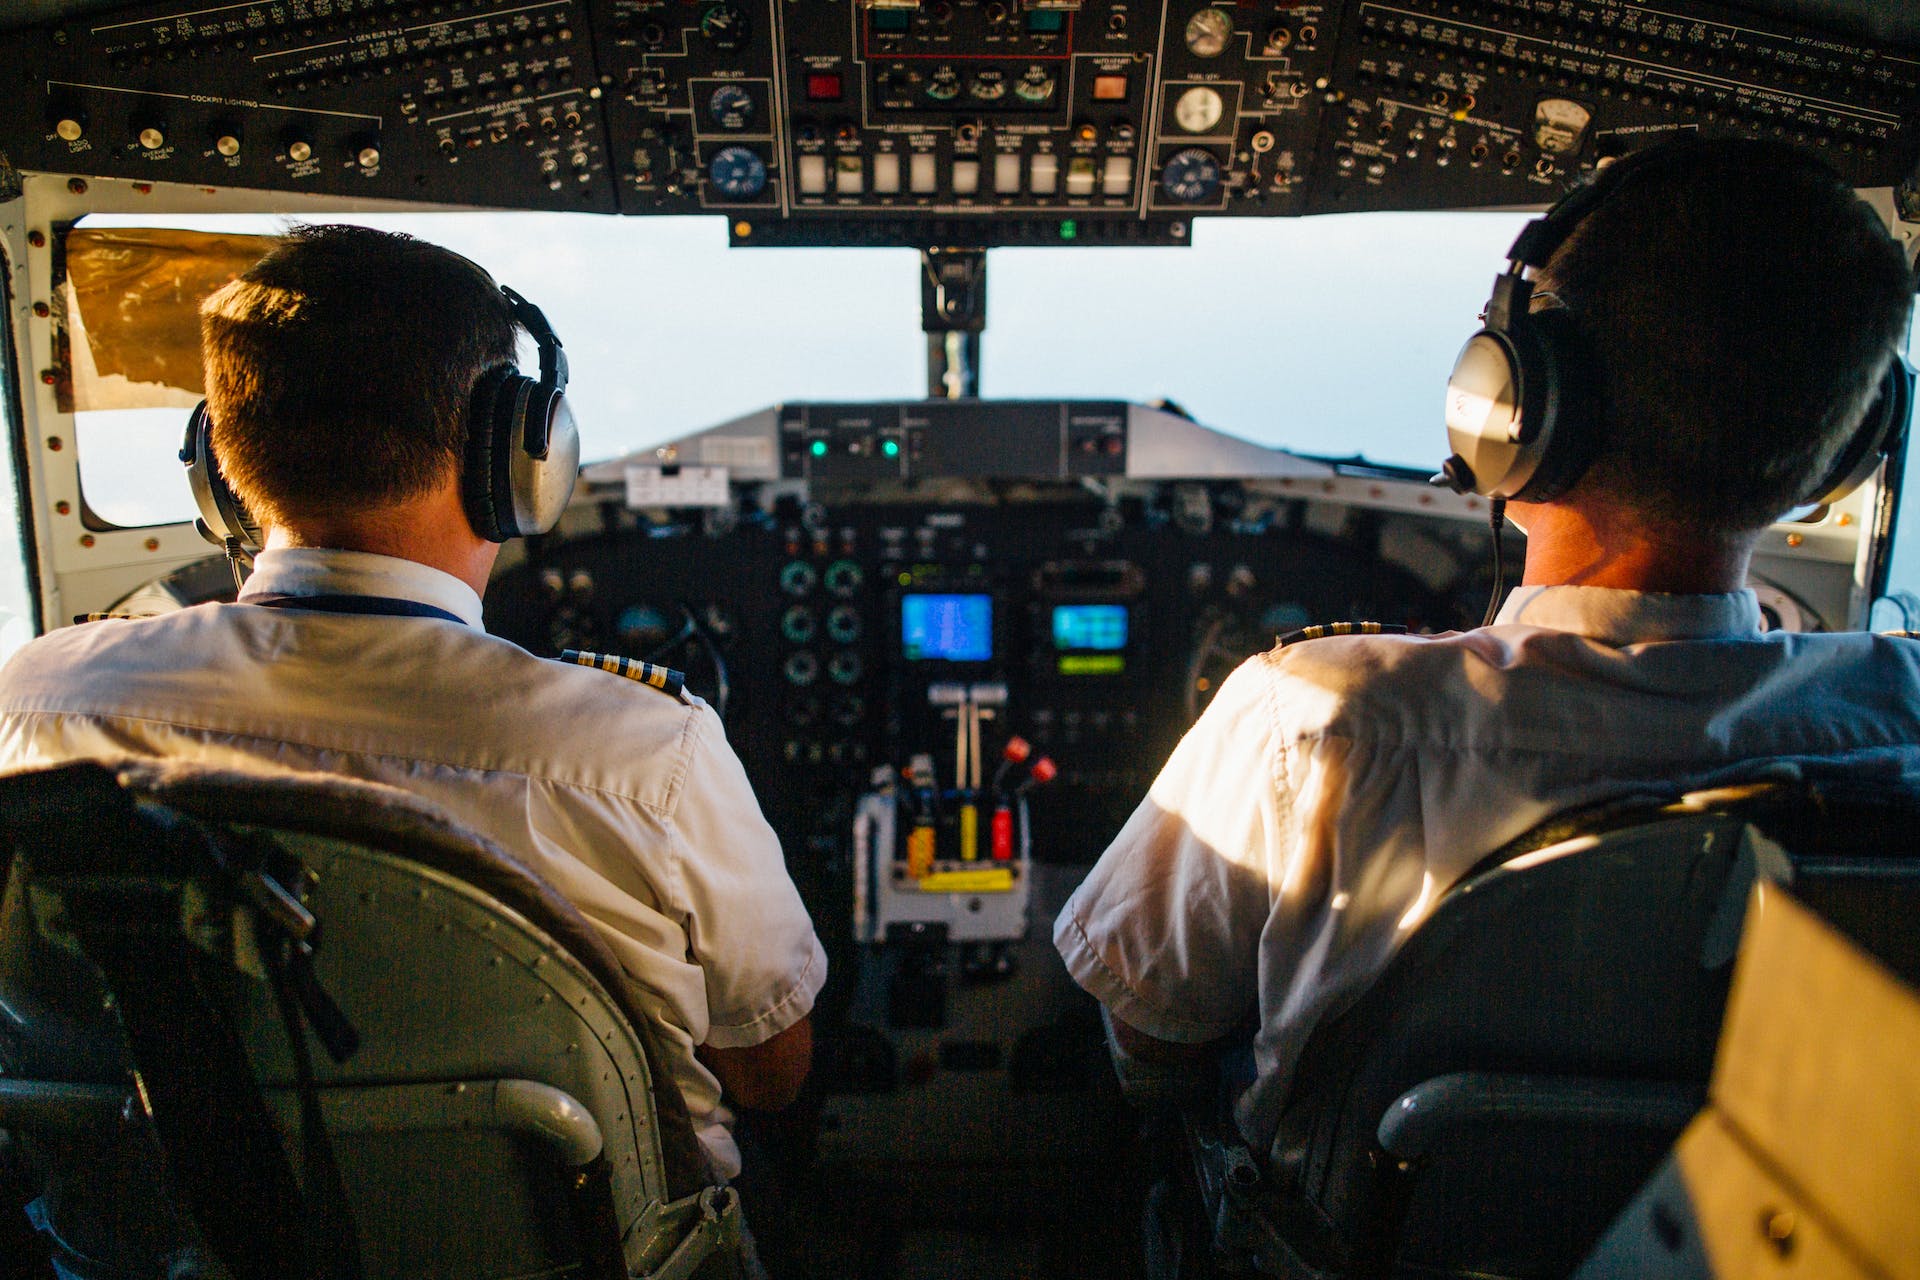 Pilots flying an aircraft | Source: Pexels